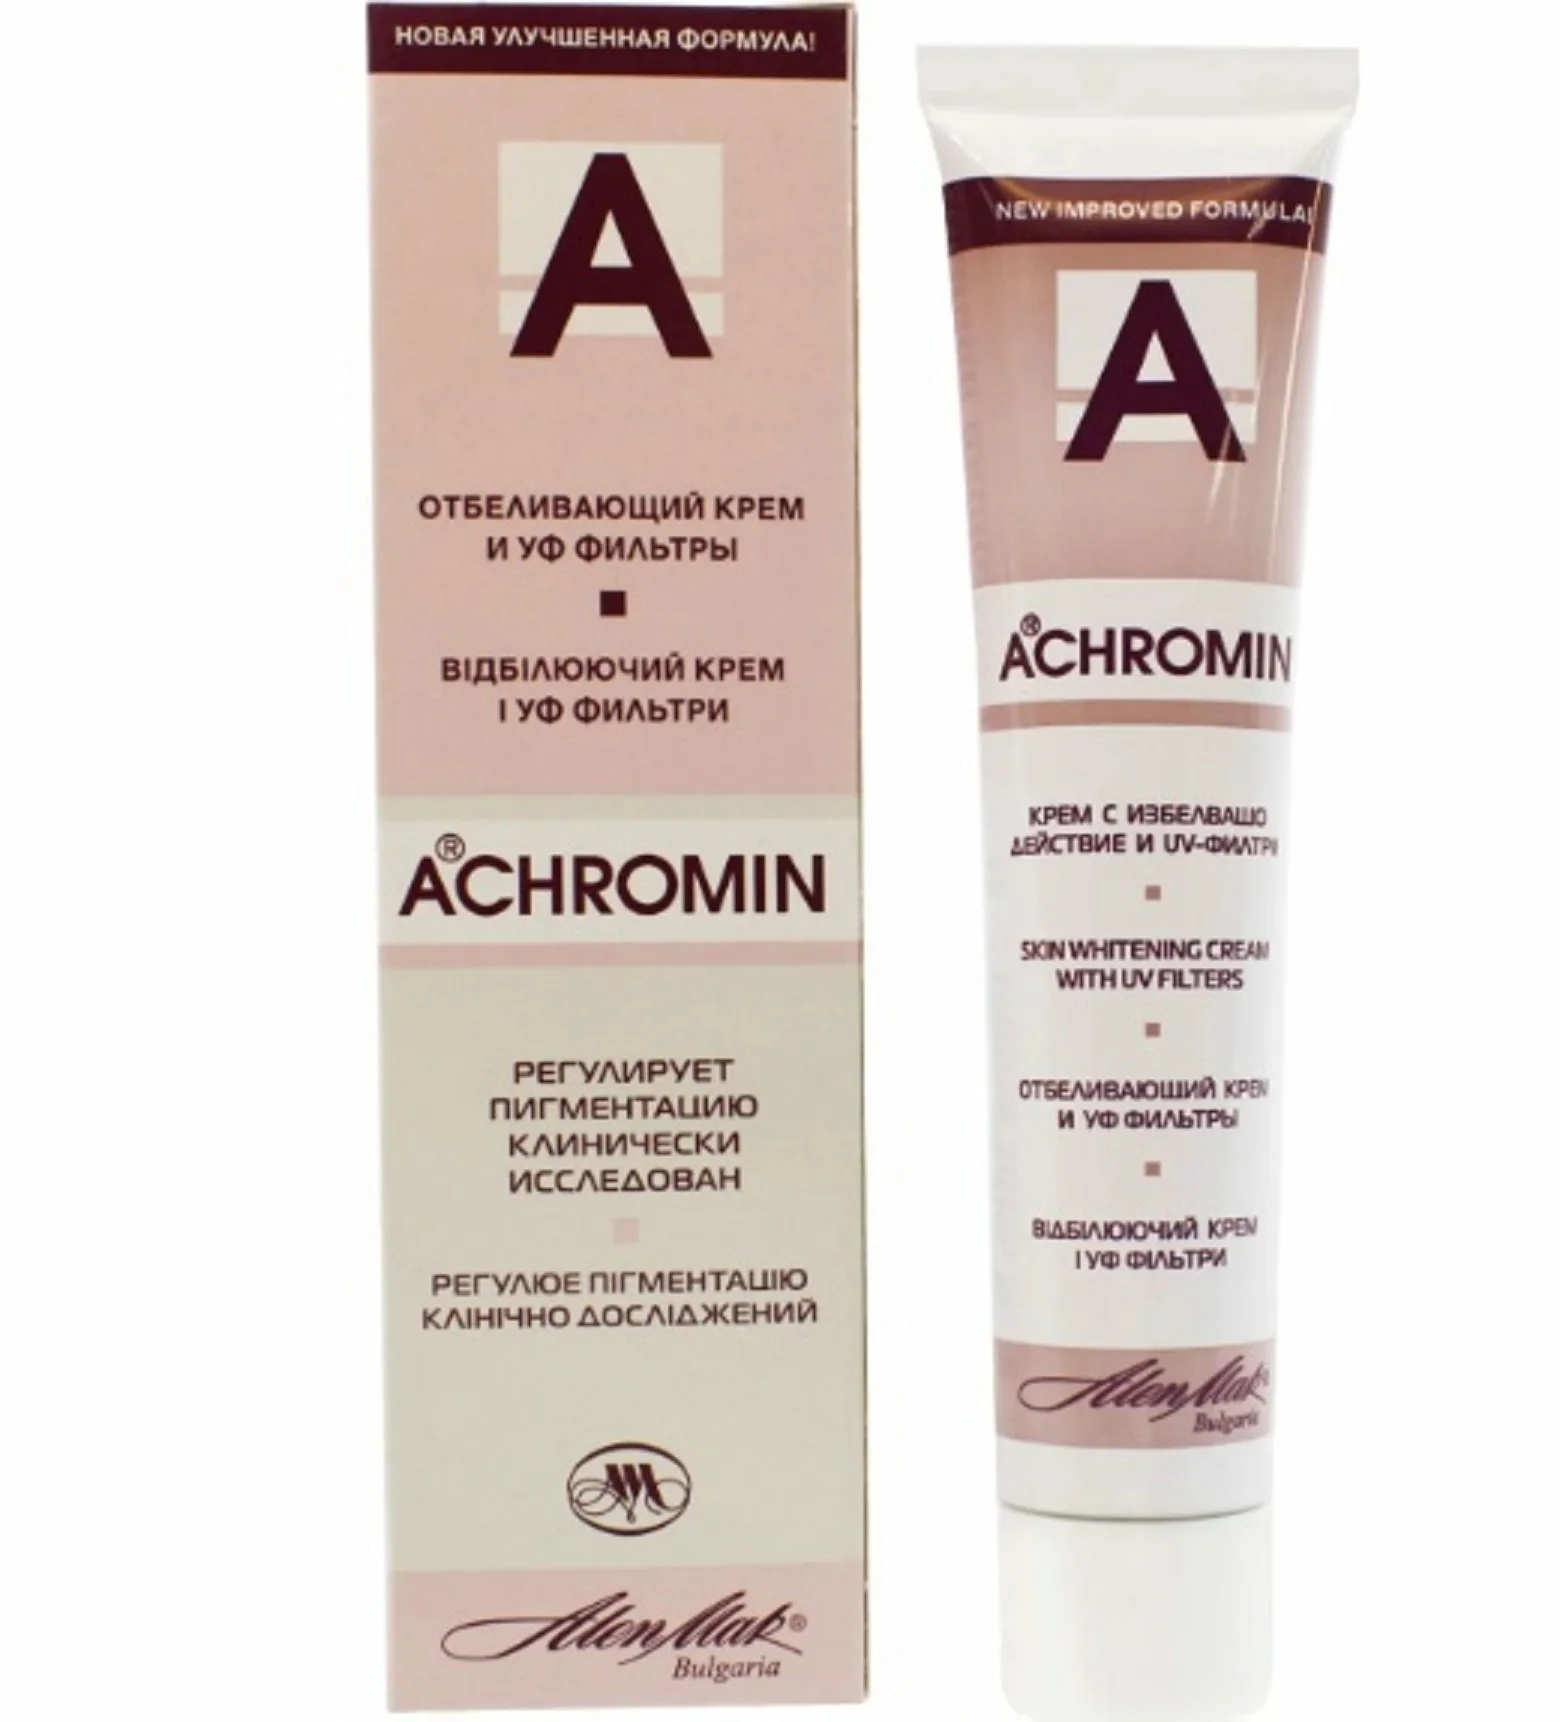 Ахромин от пятен. Ахромин 45 мл. Крем отбеливающий achromin с УФ-фильтрами 45 мл. Ахромин отбеливающий крем 45мл. Ахромин отбеливающий крем 45мл - Ветпром.